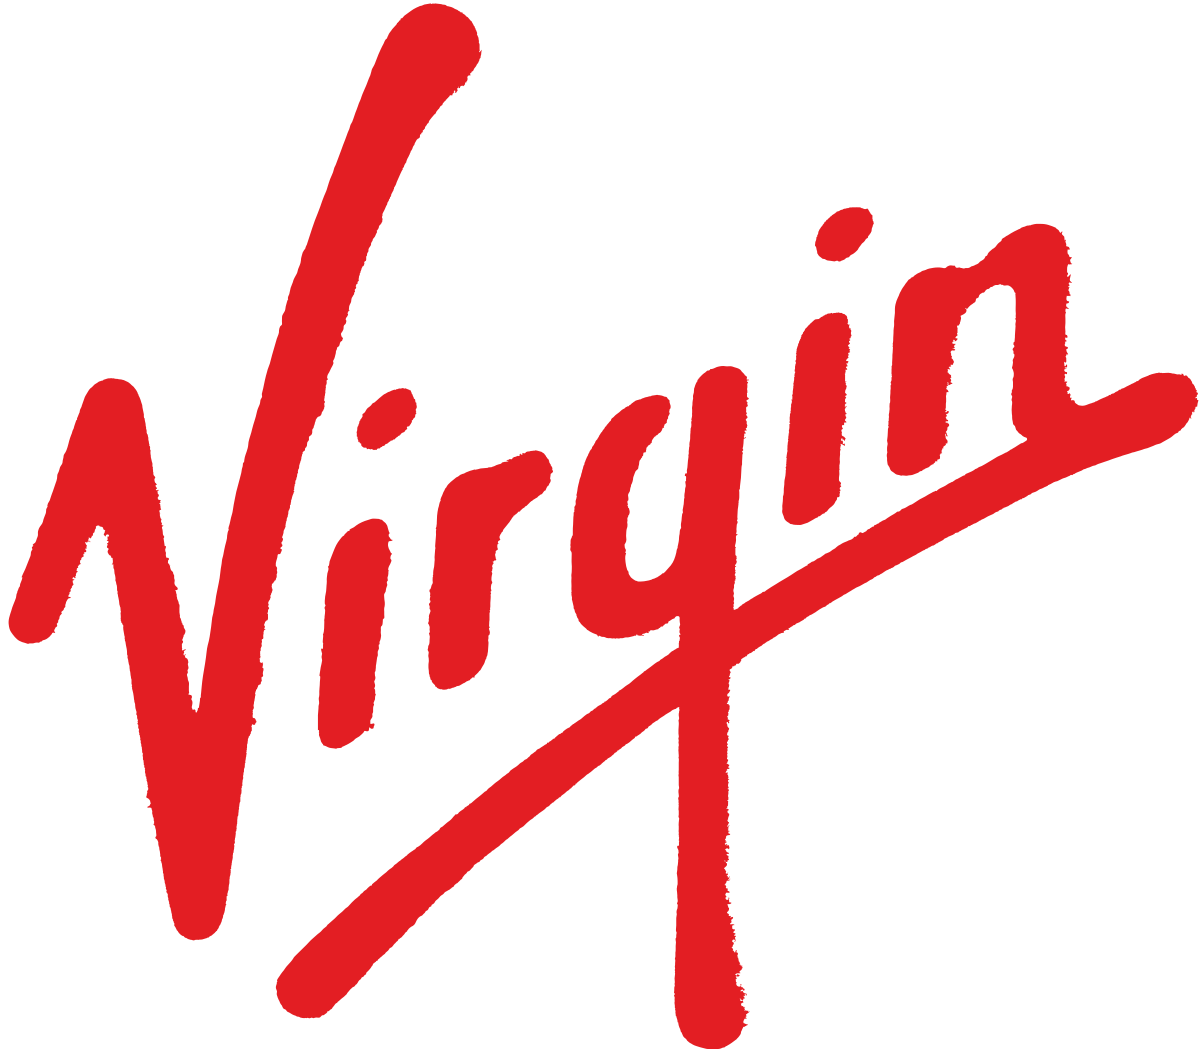 Cheap flights With Virgin Atlantic | Compare Virgin Atlantic Flights